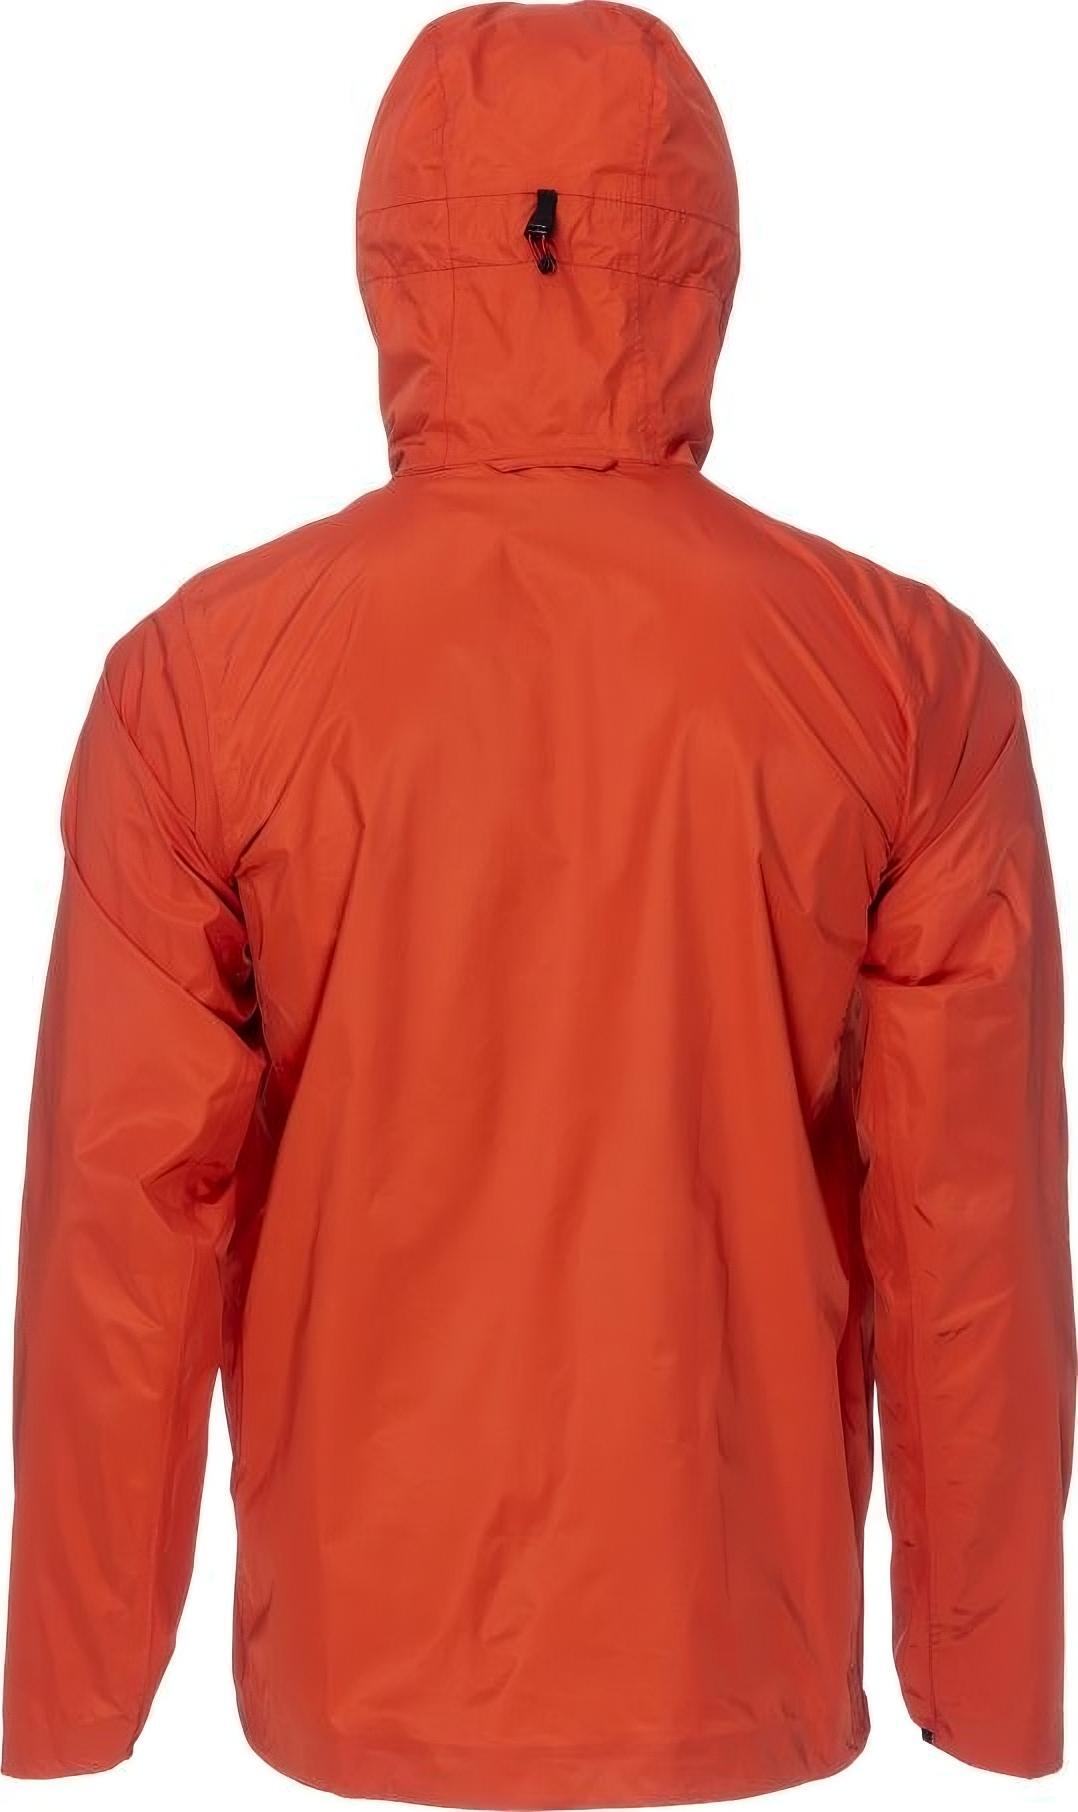 Куртка мужская Turbat Isla Mns orange red L красный фото 4